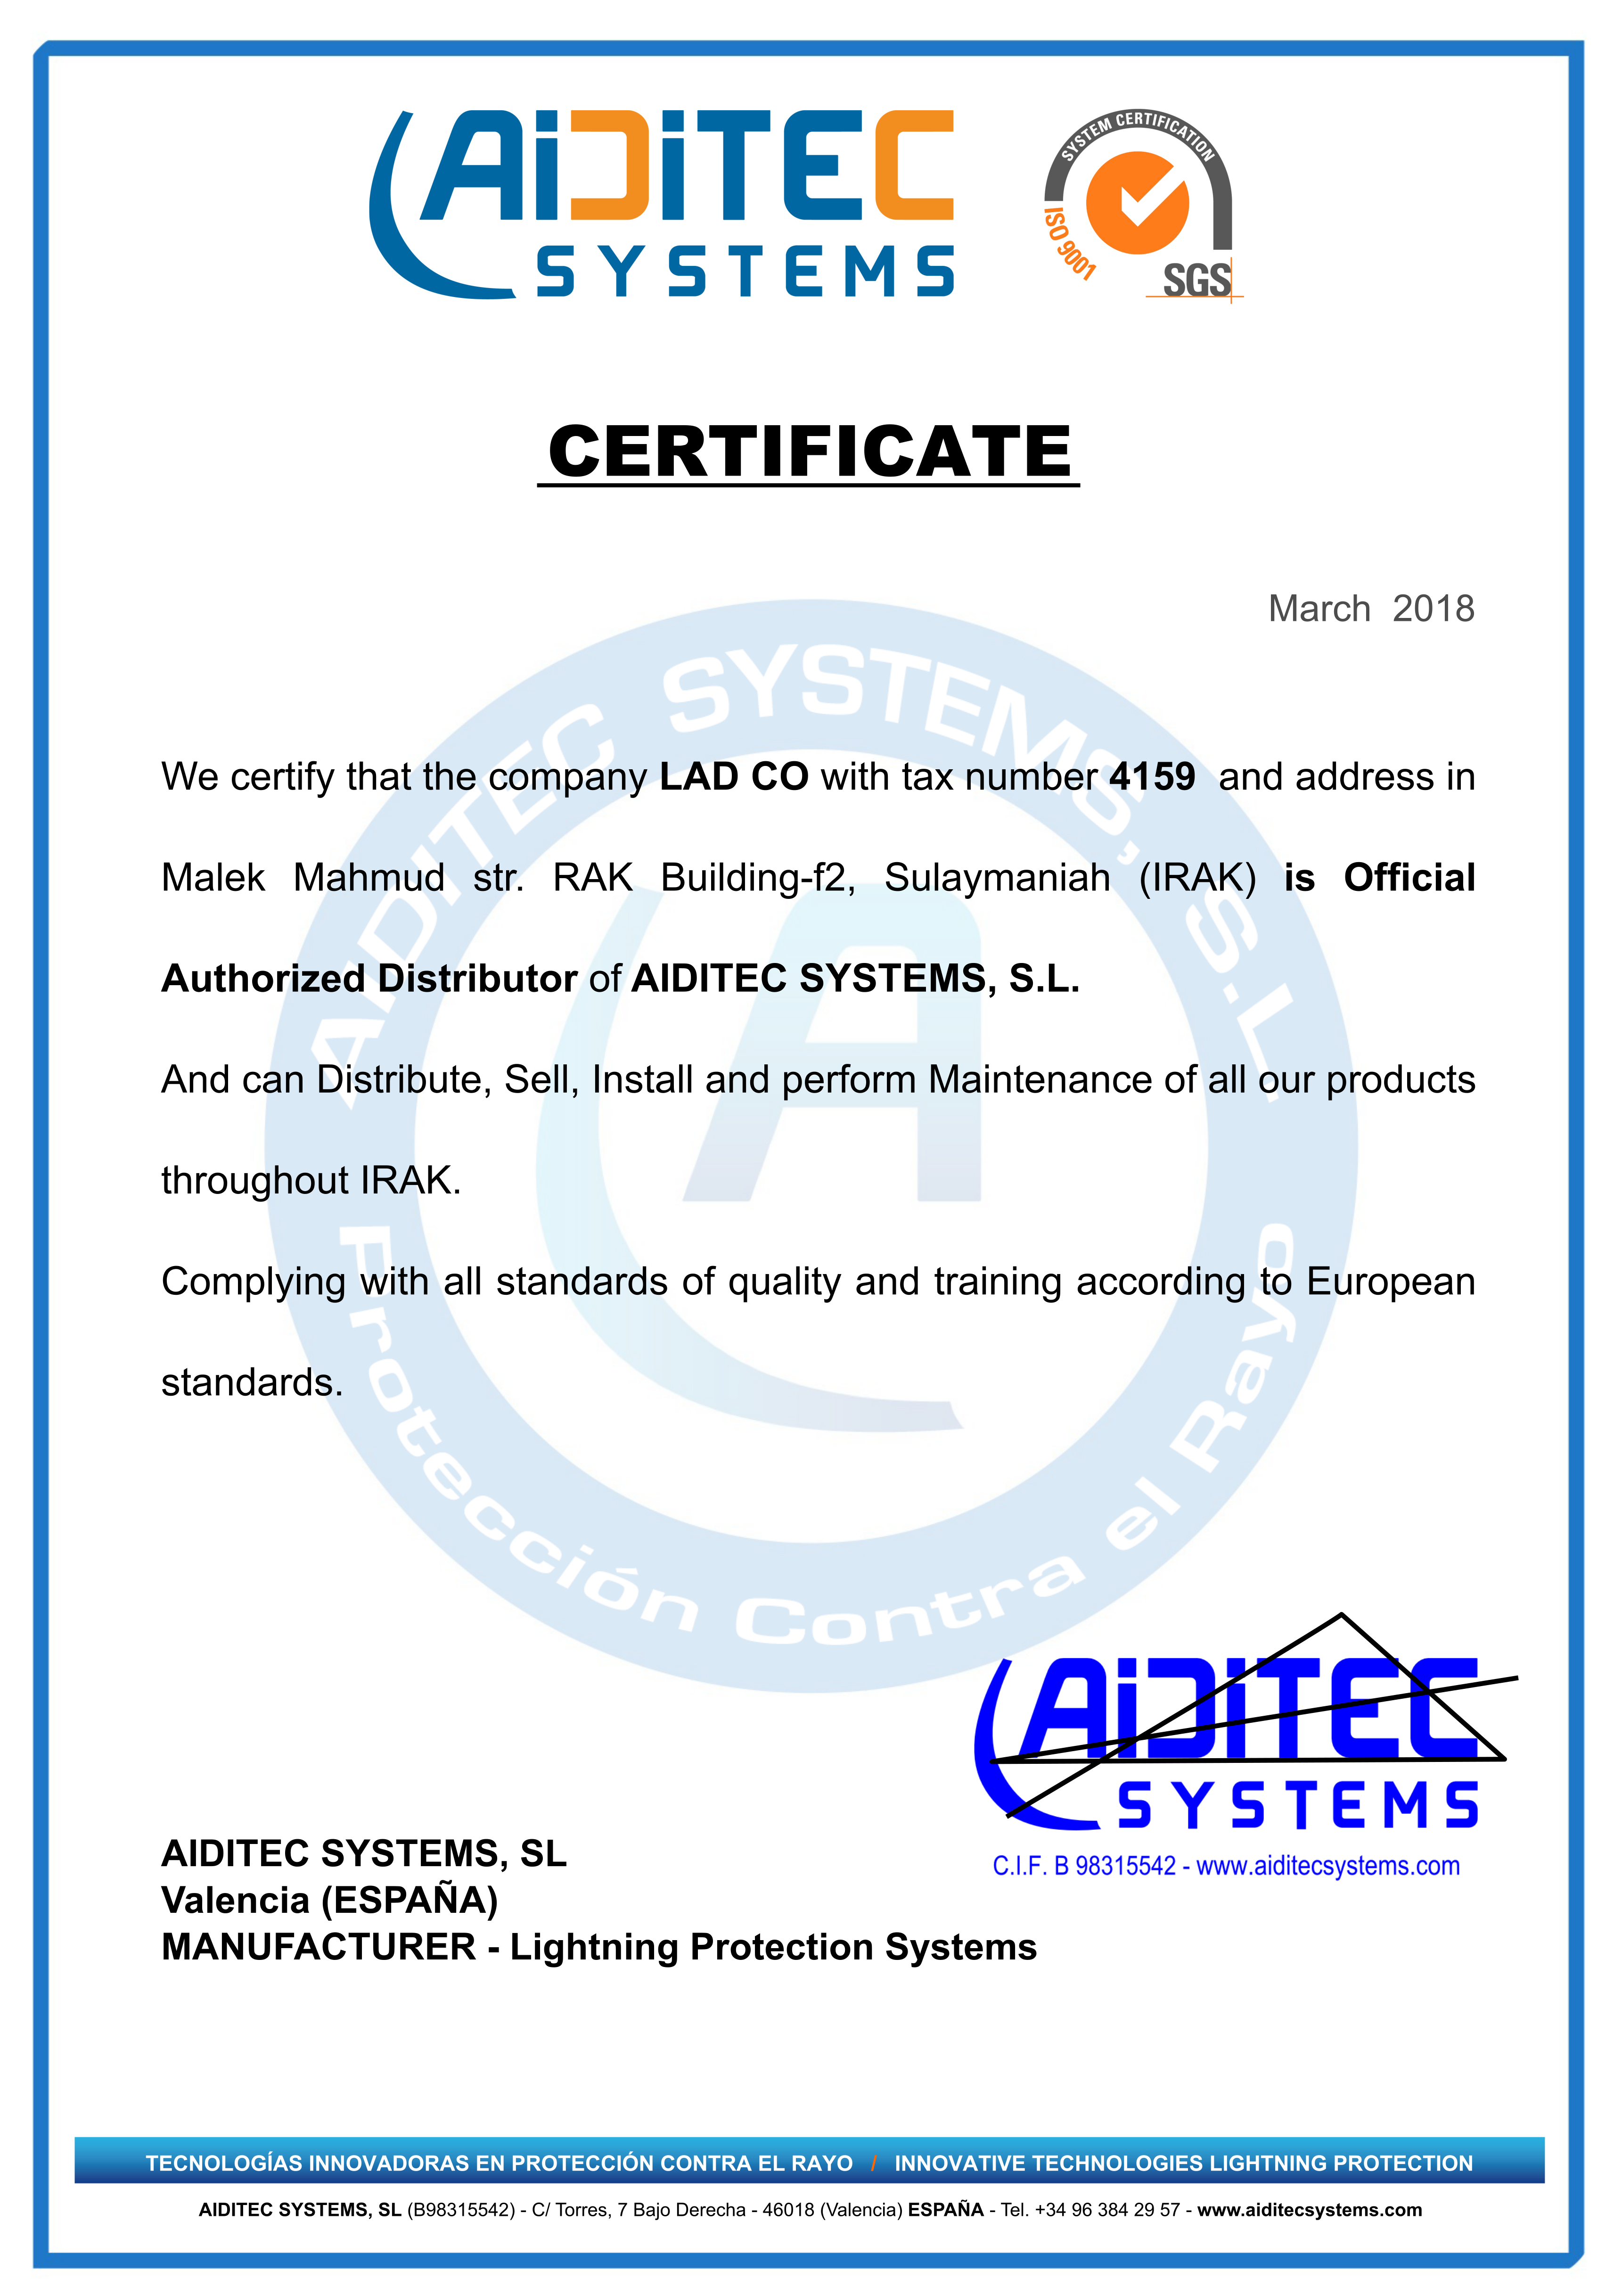 Distributor Certificate